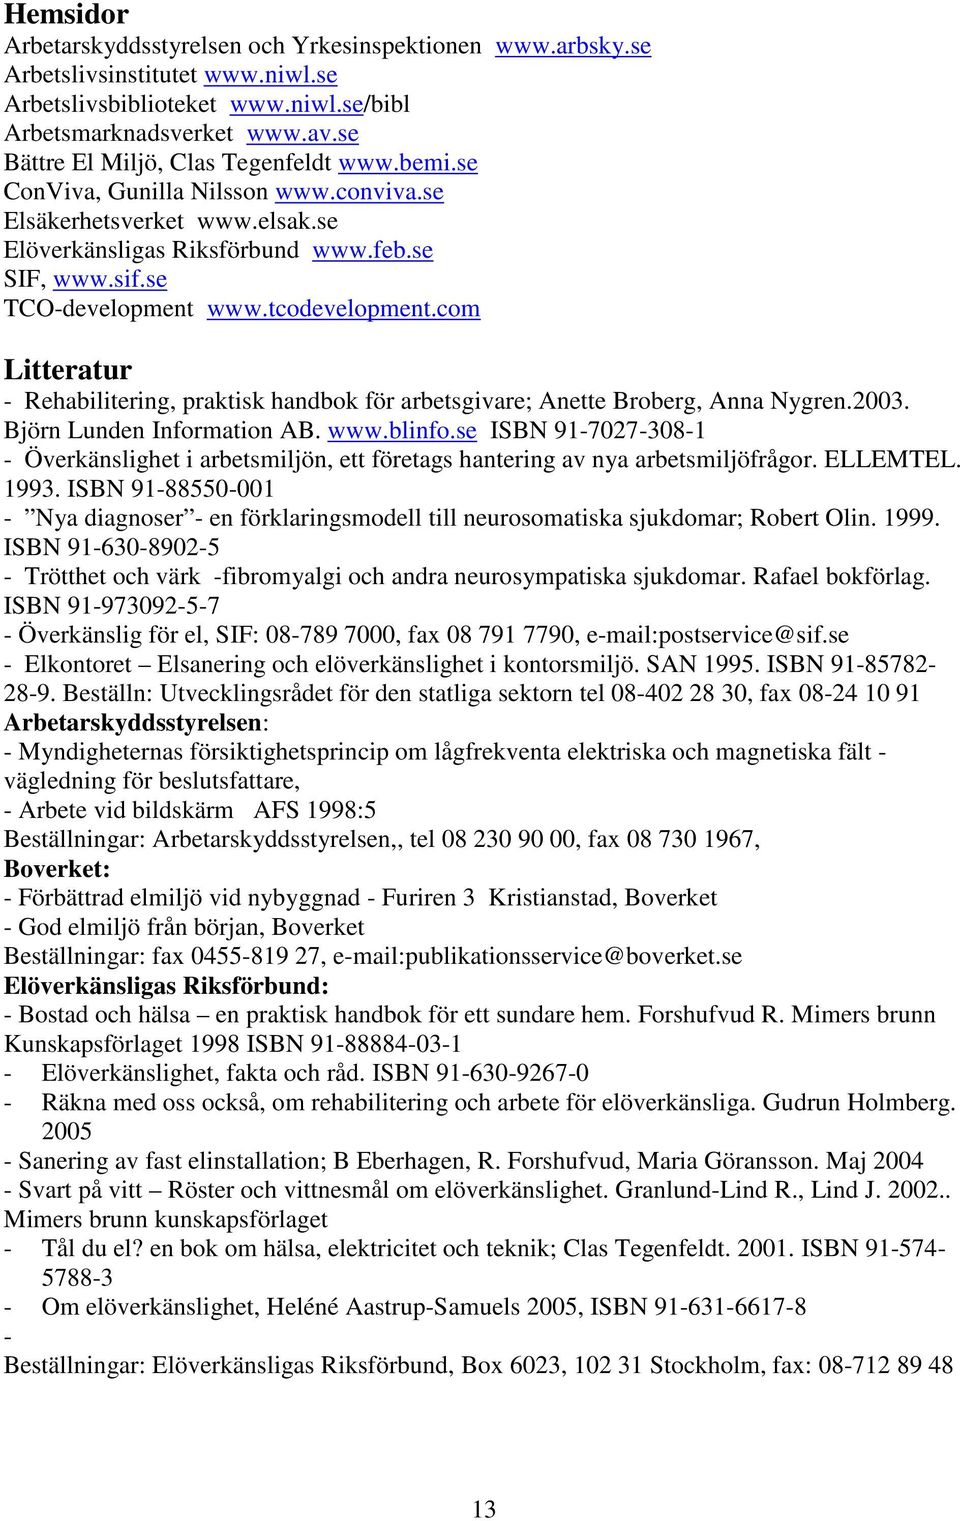 tcodevelopment.com Litteratur - Rehabilitering, praktisk handbok för arbetsgivare; Anette Broberg, Anna Nygren.2003. Björn Lunden Information AB. www.blinfo.